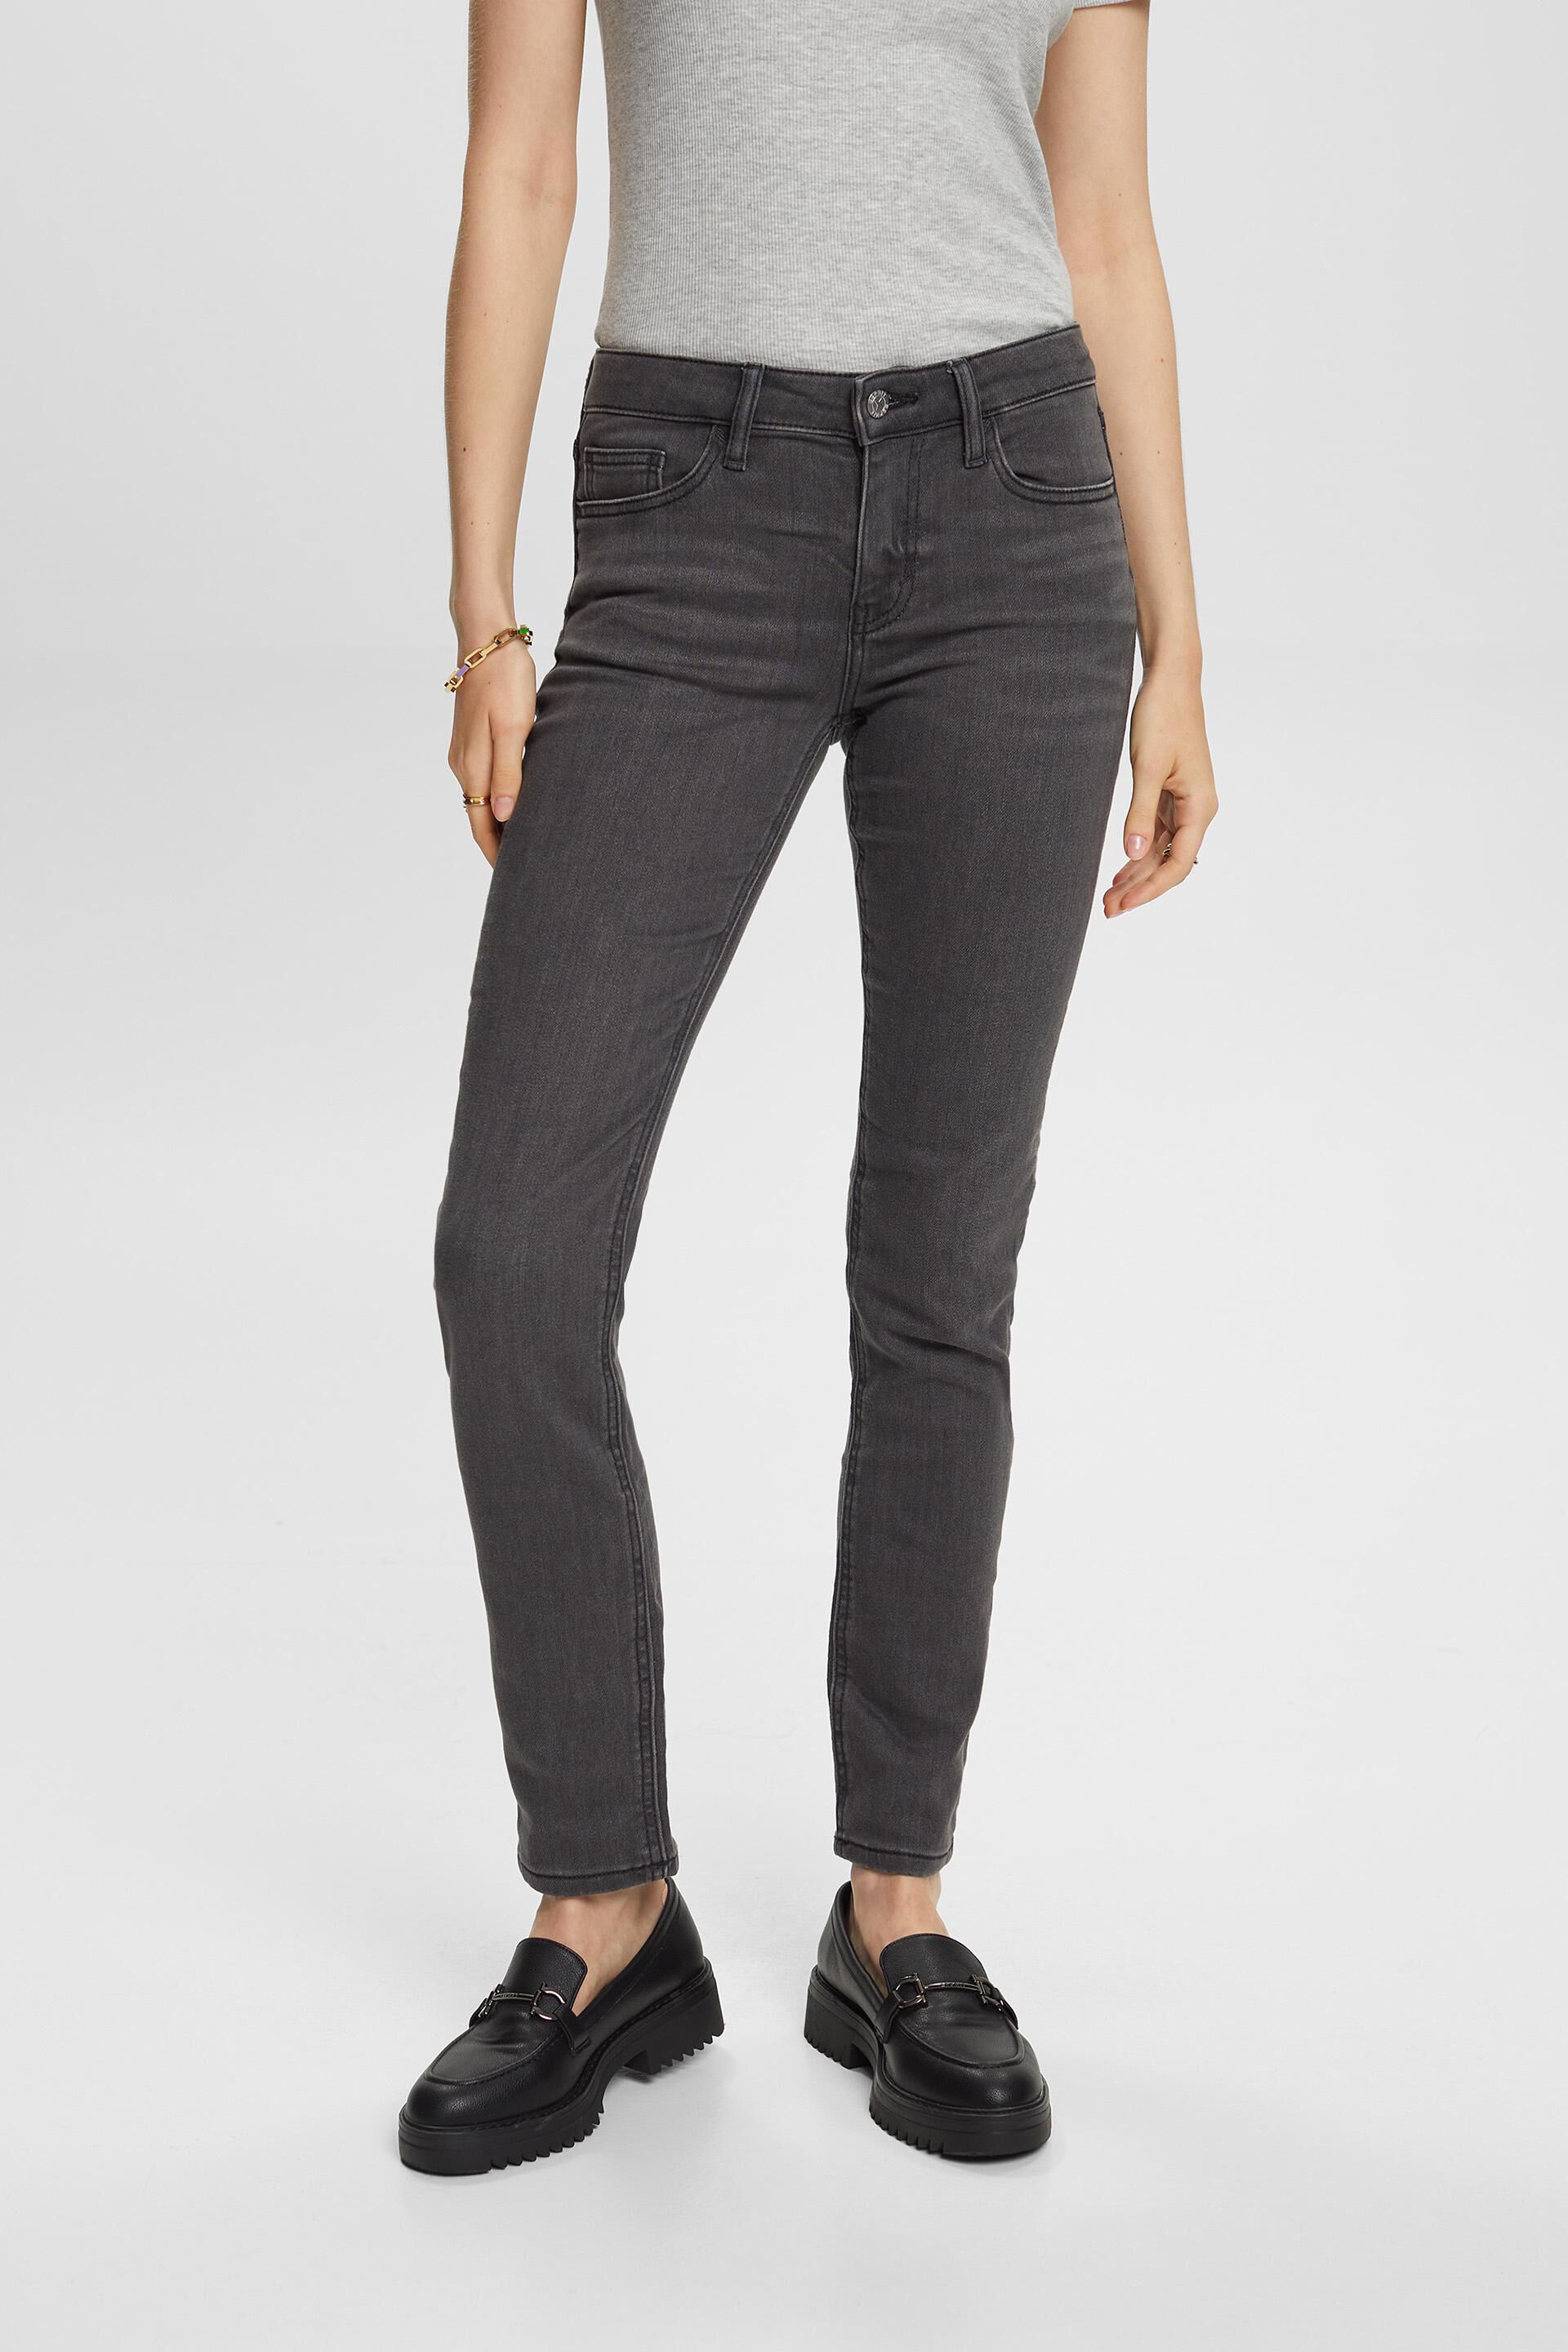 Esprit jeans fit Slim stretch